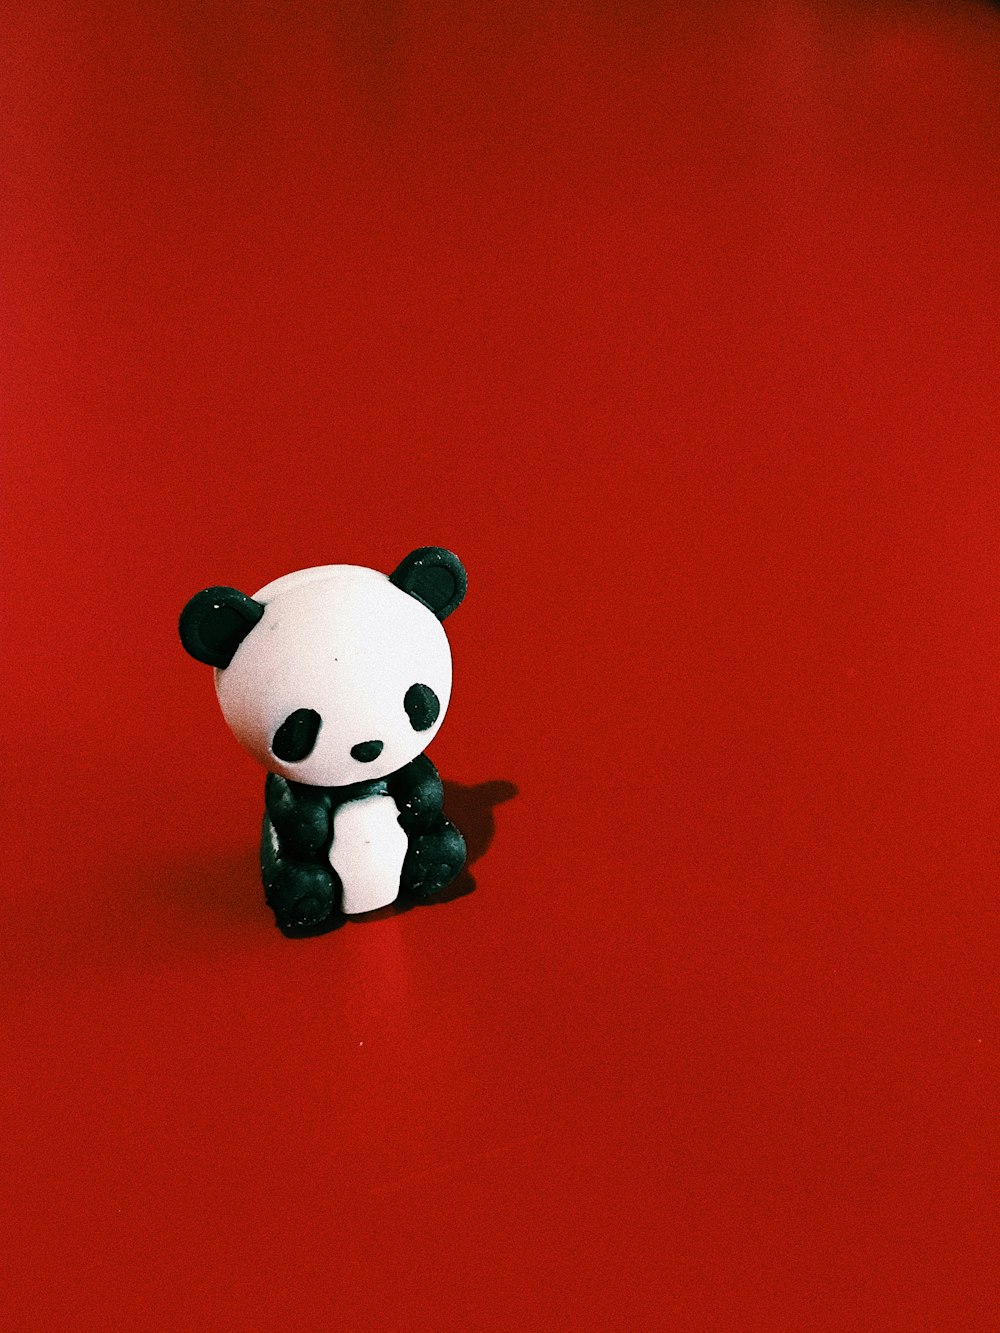 panda bear figurine sitting on red surface